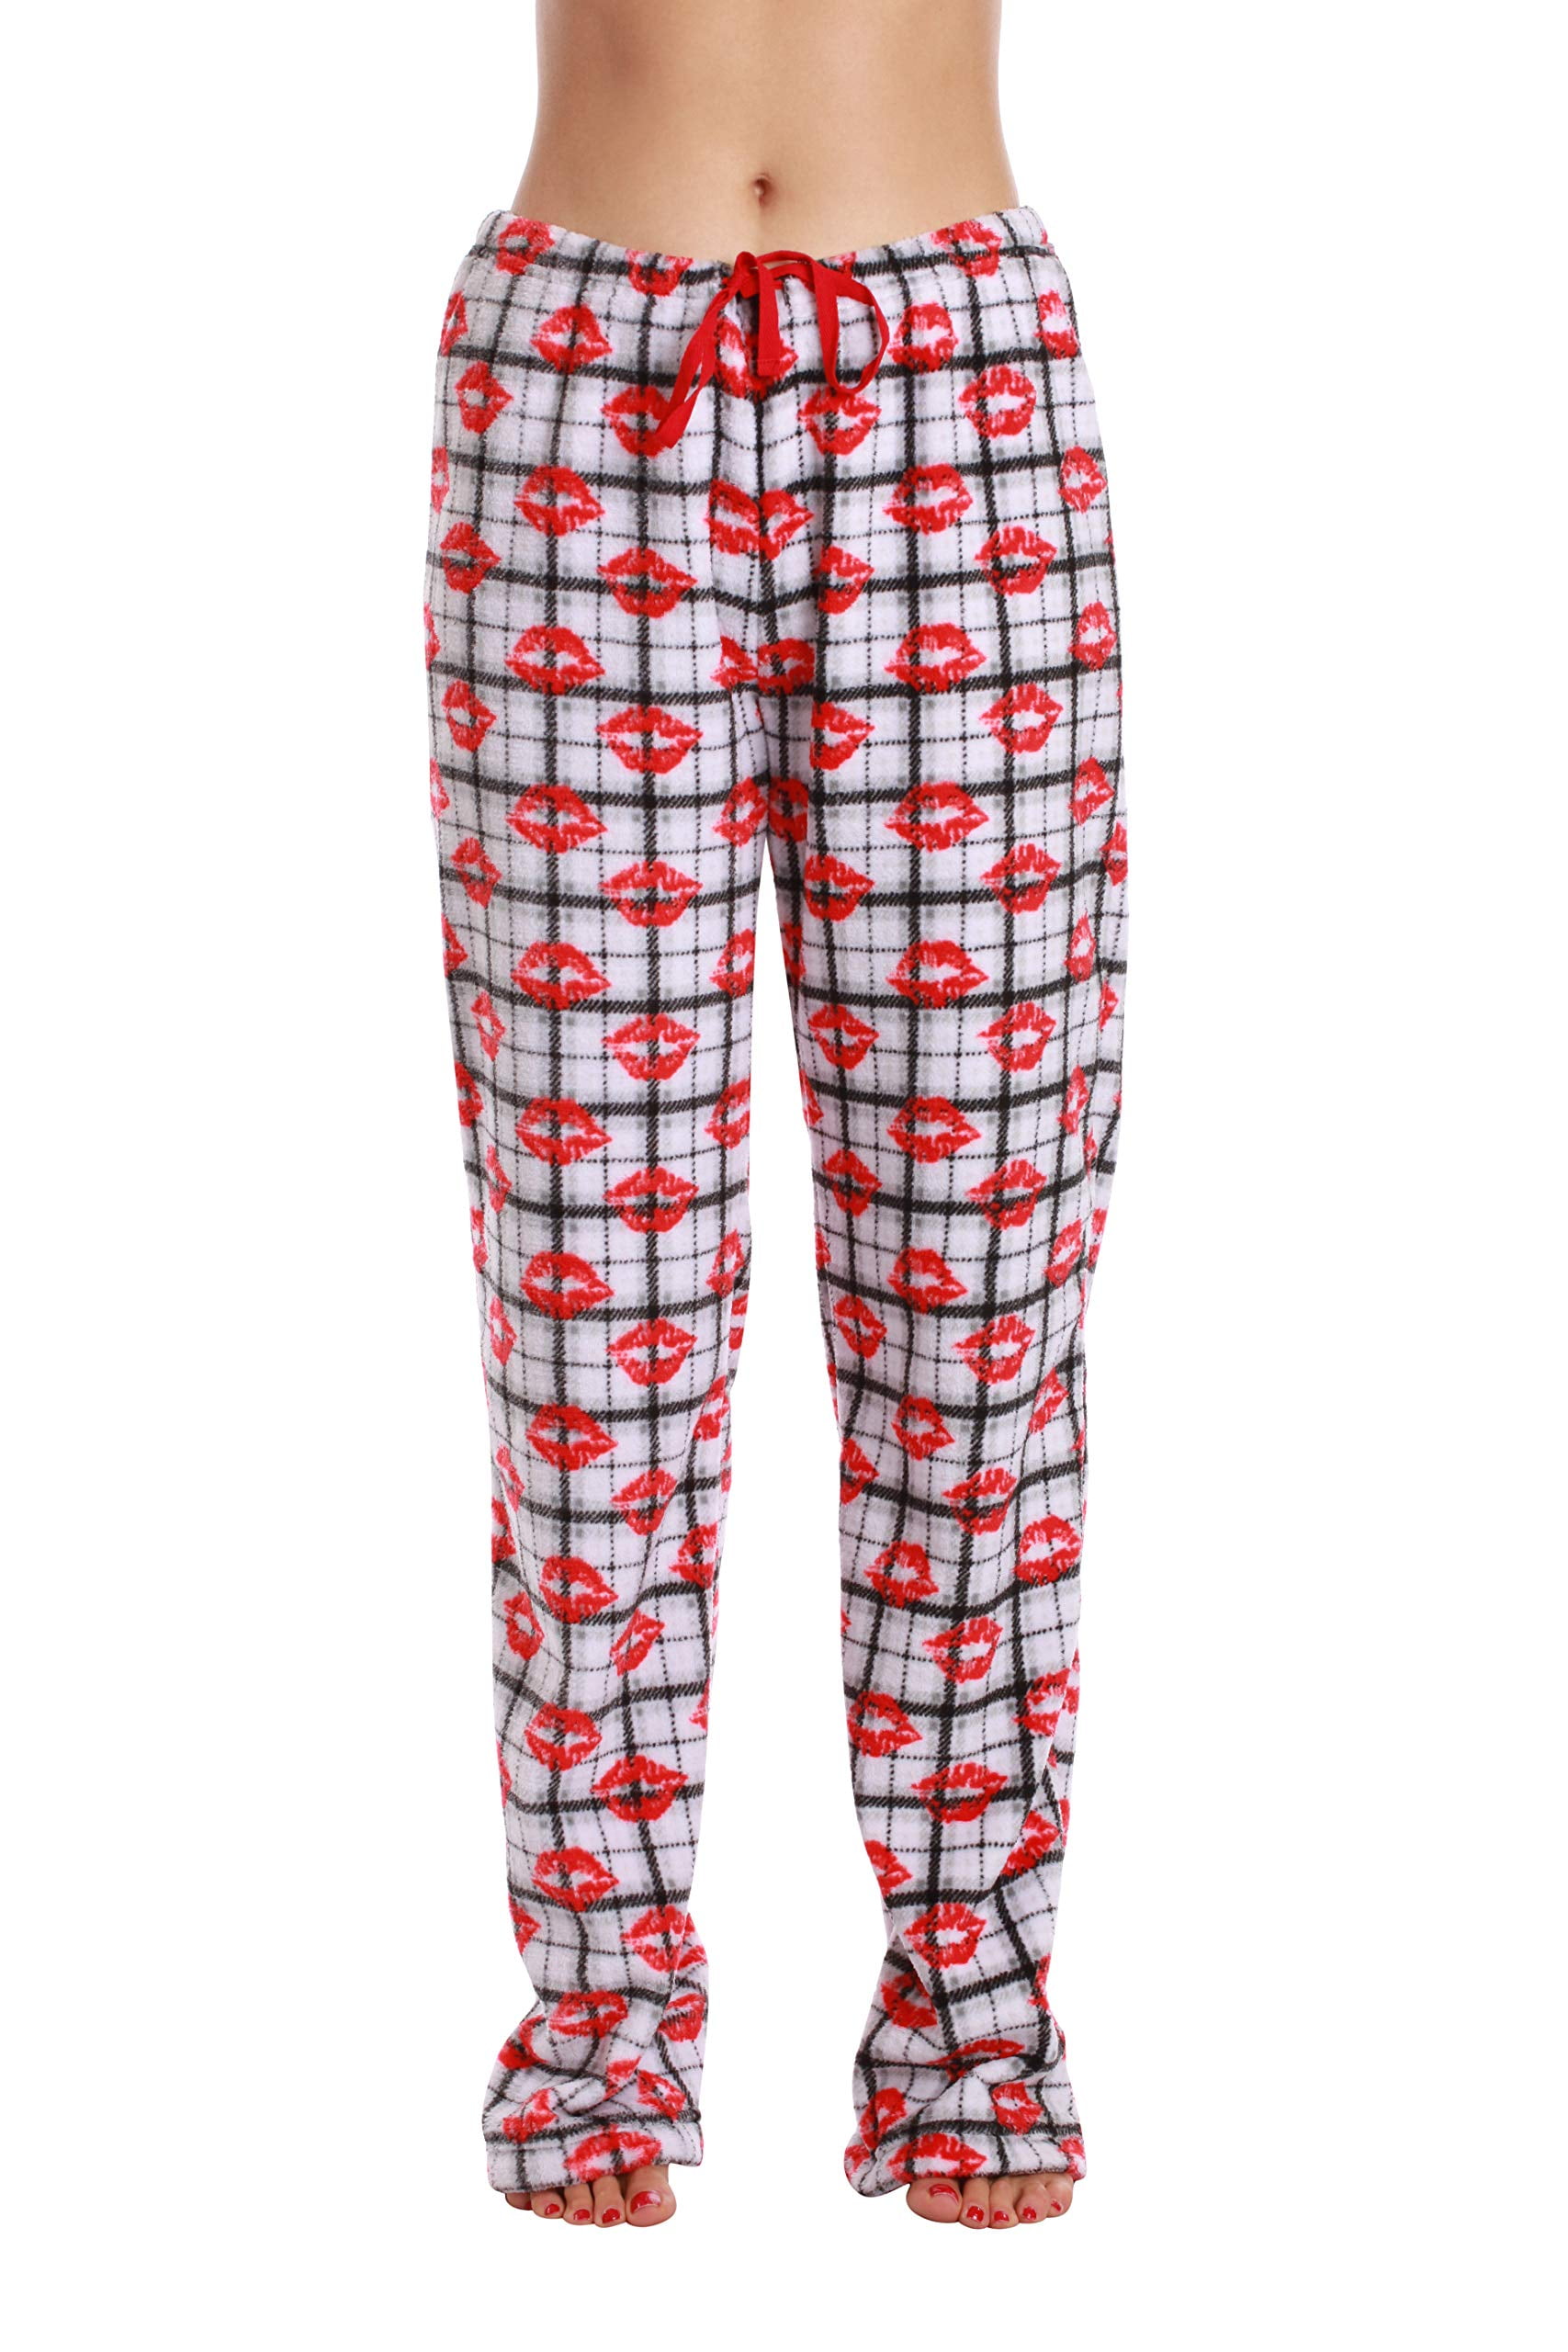 Just Love Women's Plush Pajama Pants 6339-10668-RB-1X